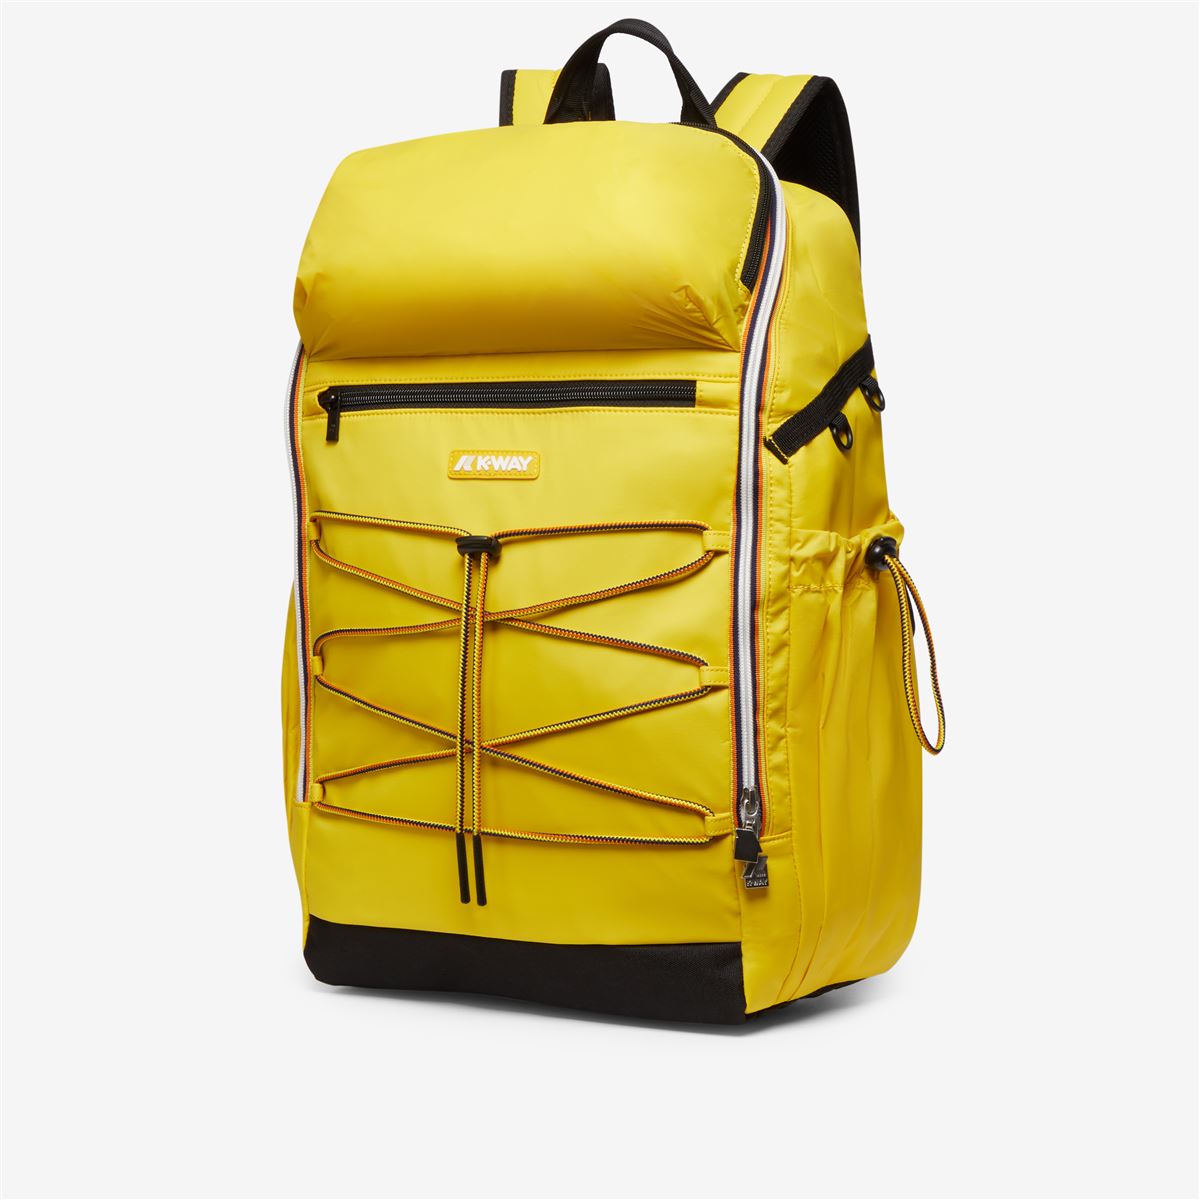 MONTE LIMAR - Bag - Nylon - Unisex - Yellow Dk